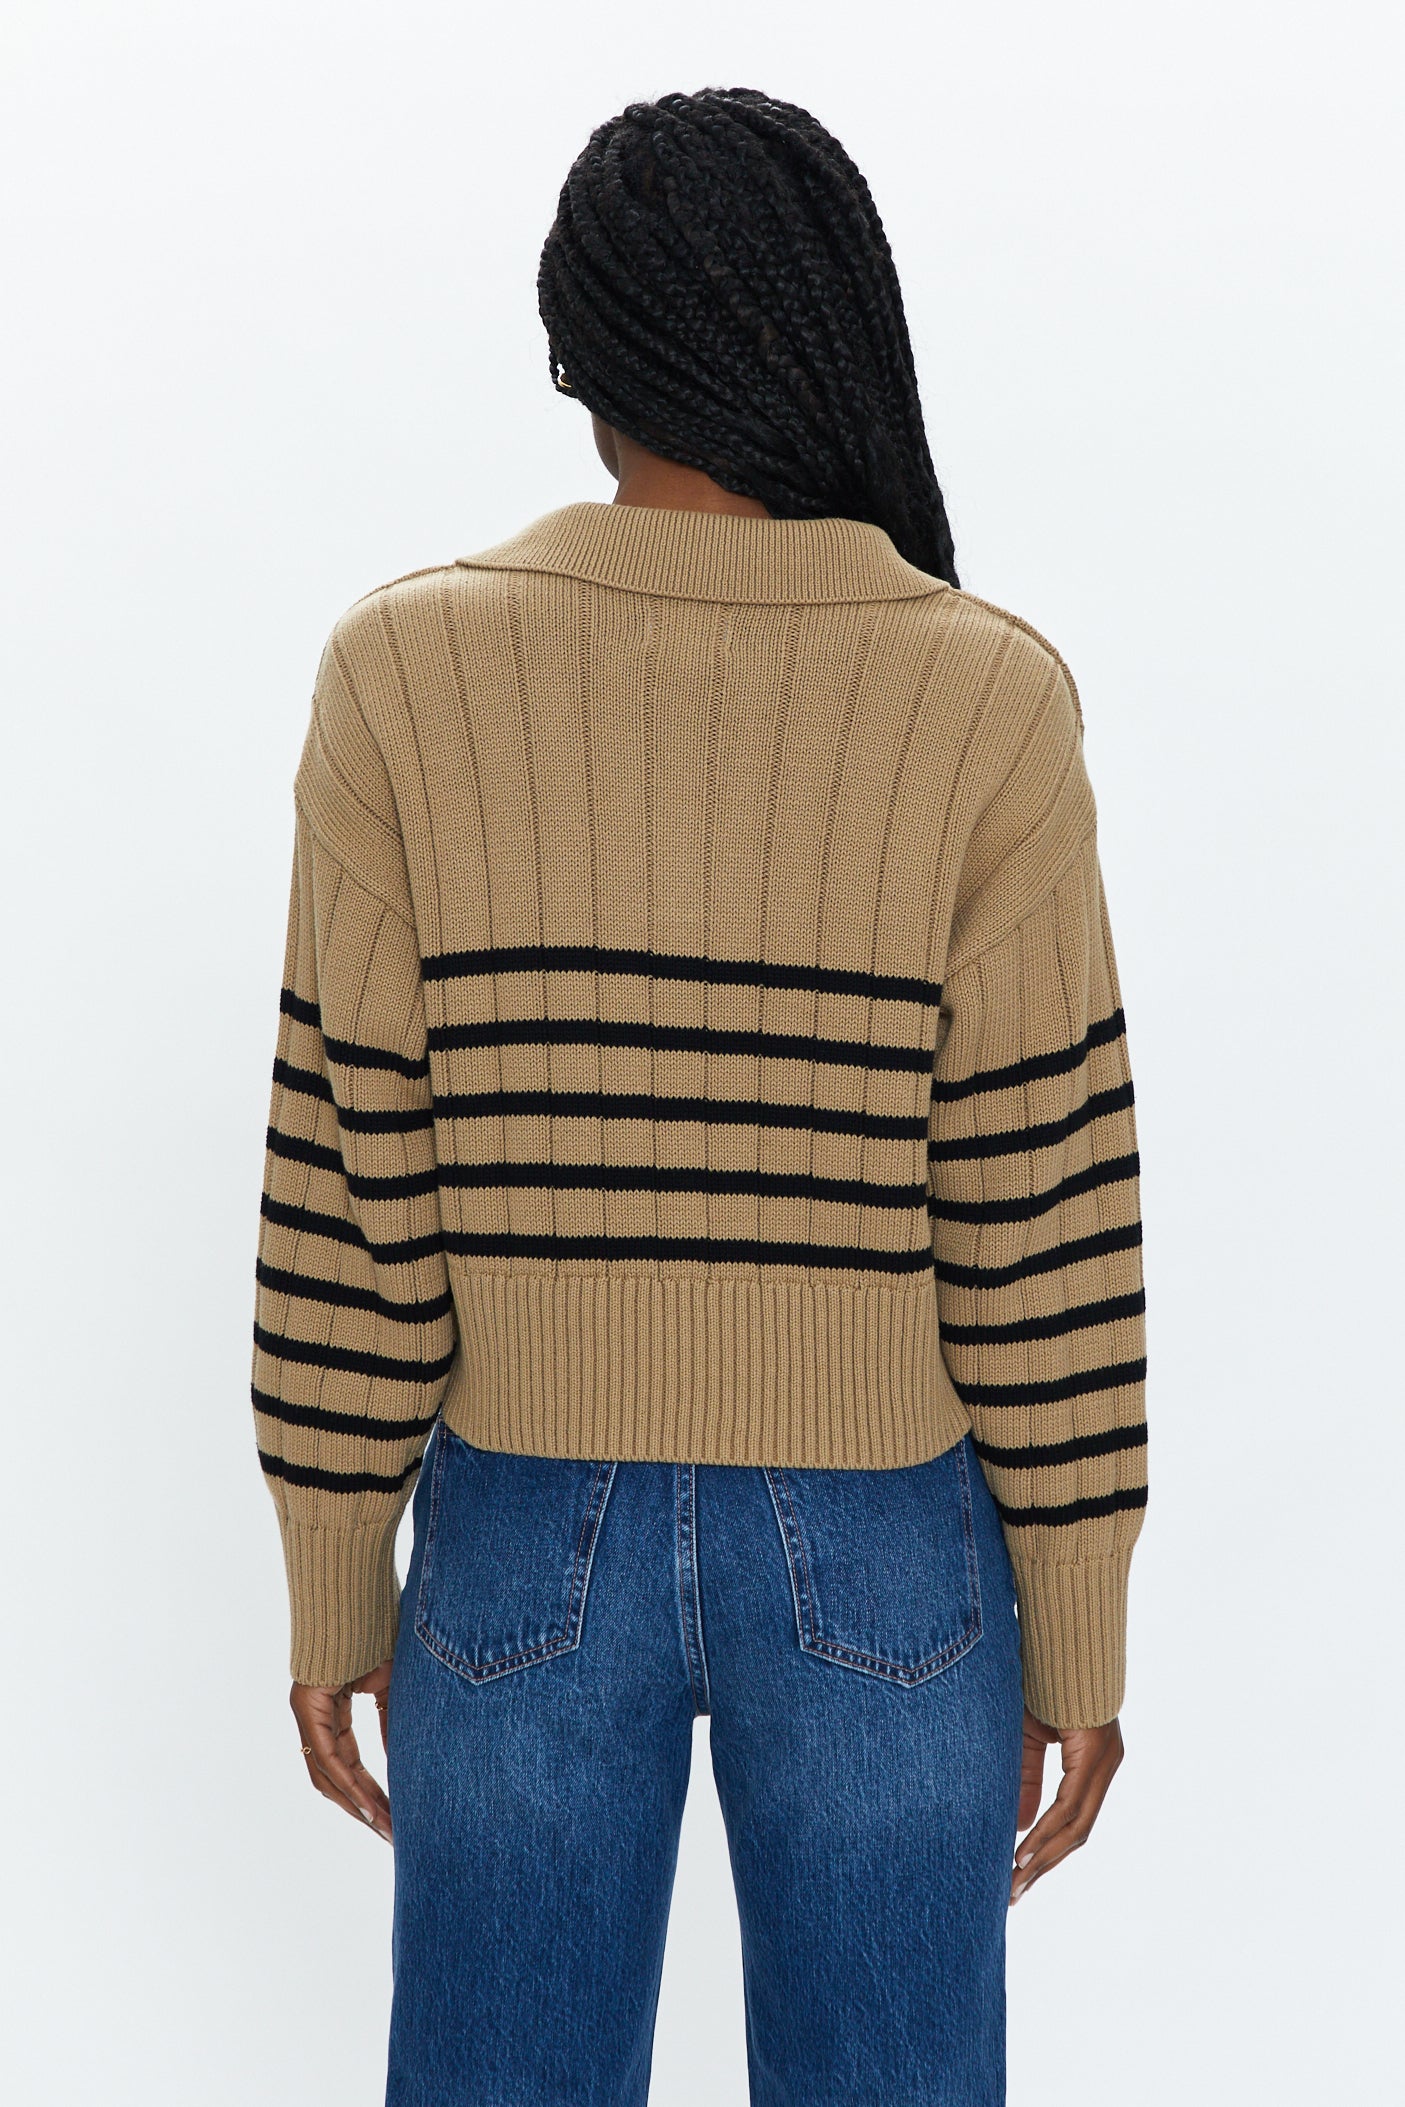 Arlo Polo Sweater - Tan Noir Stripe